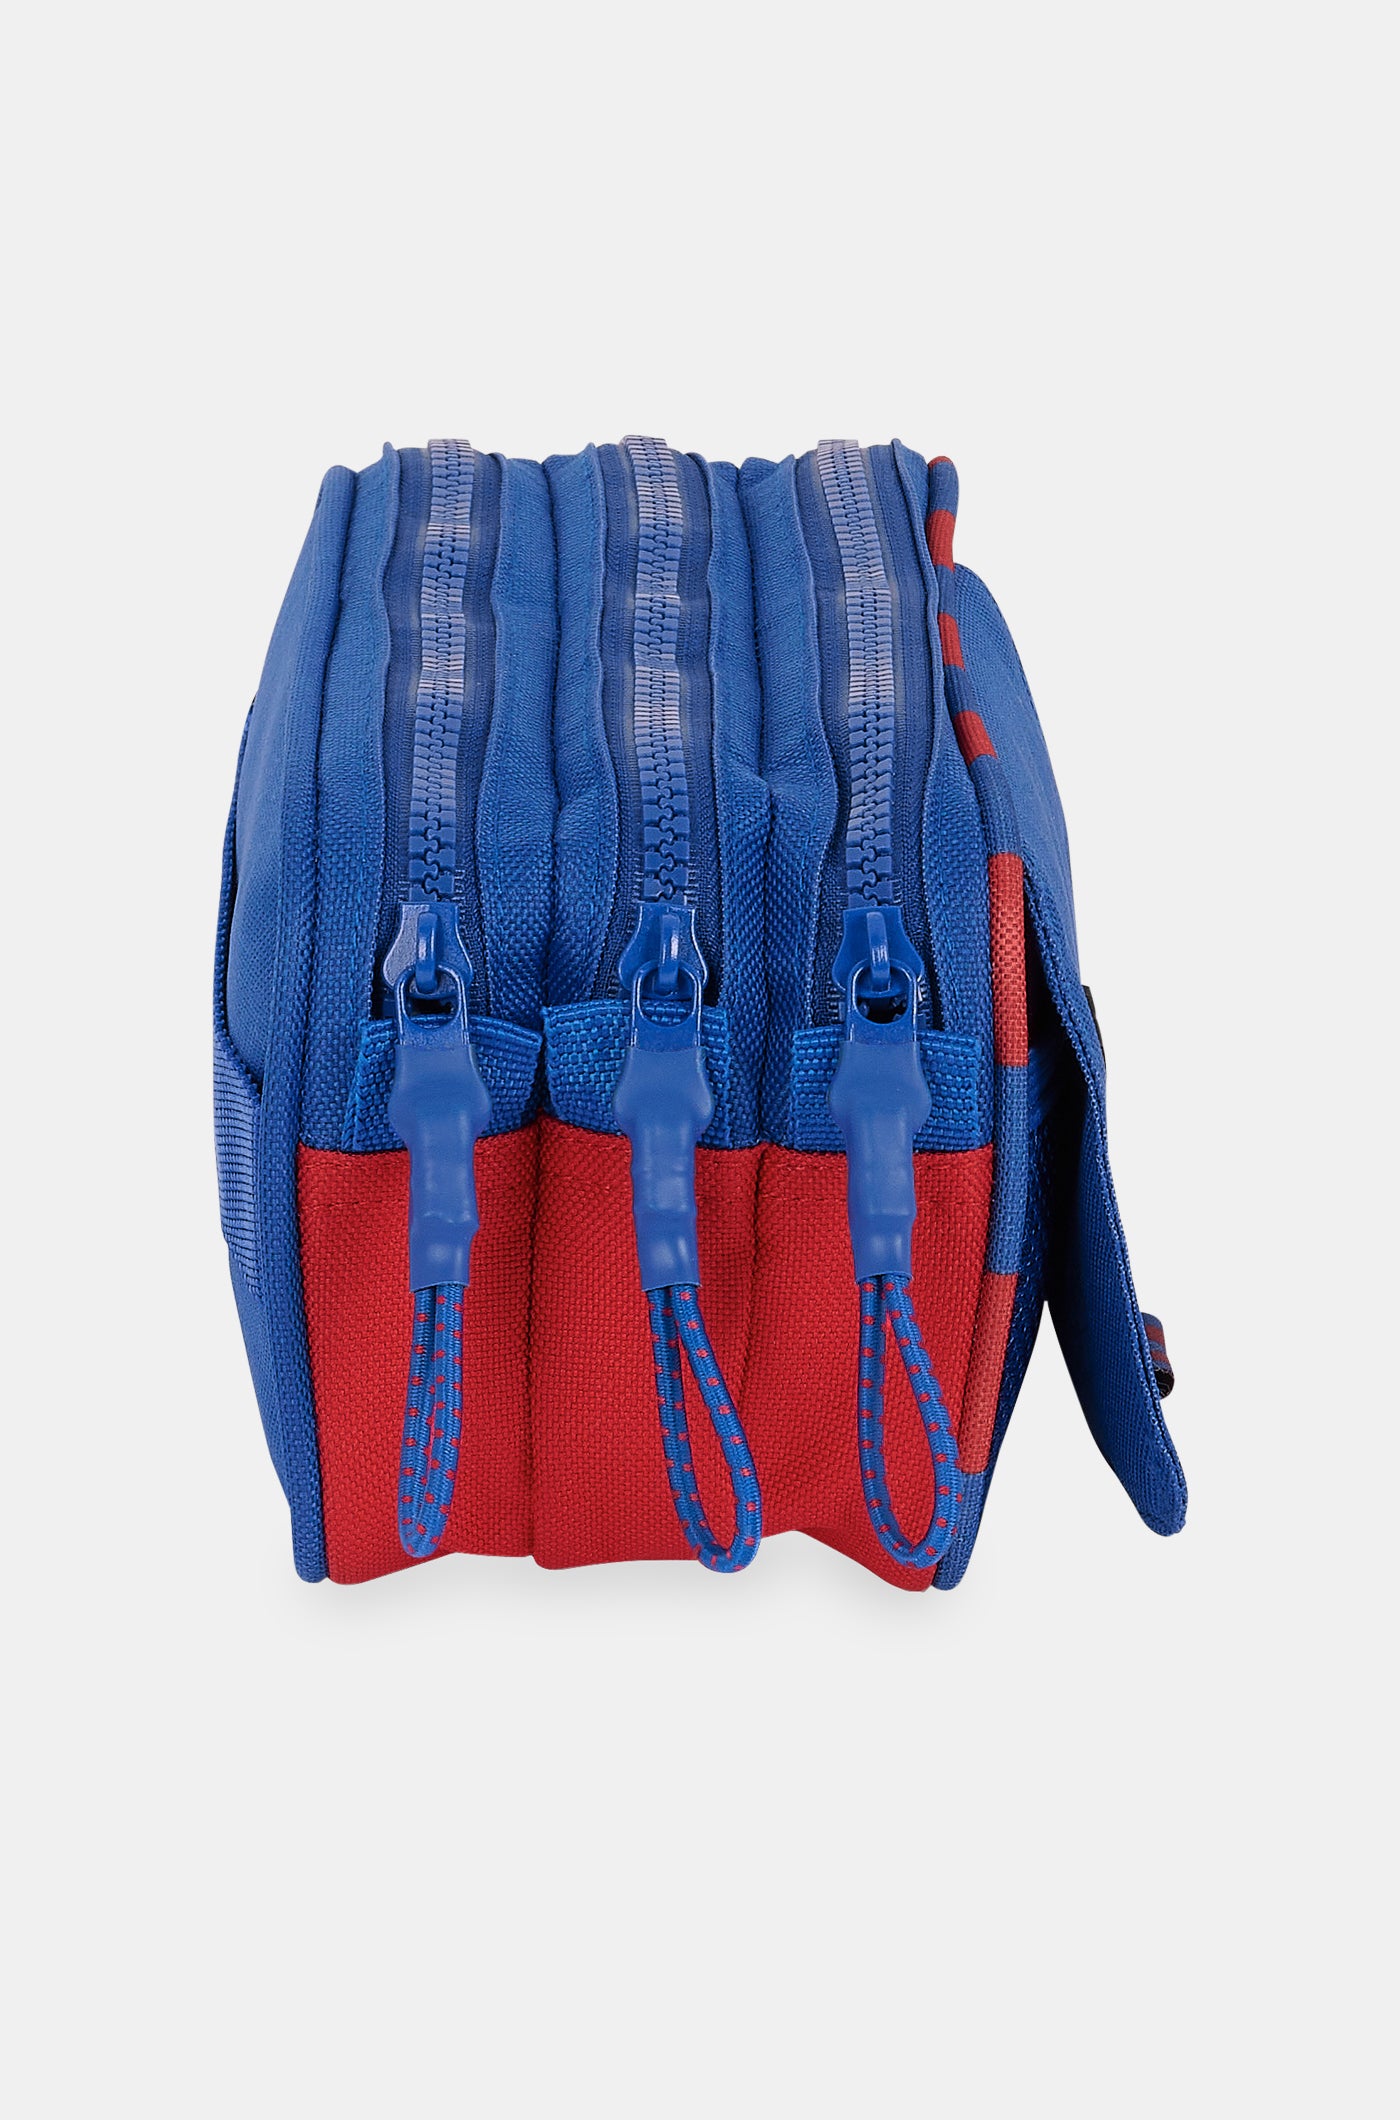 Away kit zipper case FC Barcelona 23/24